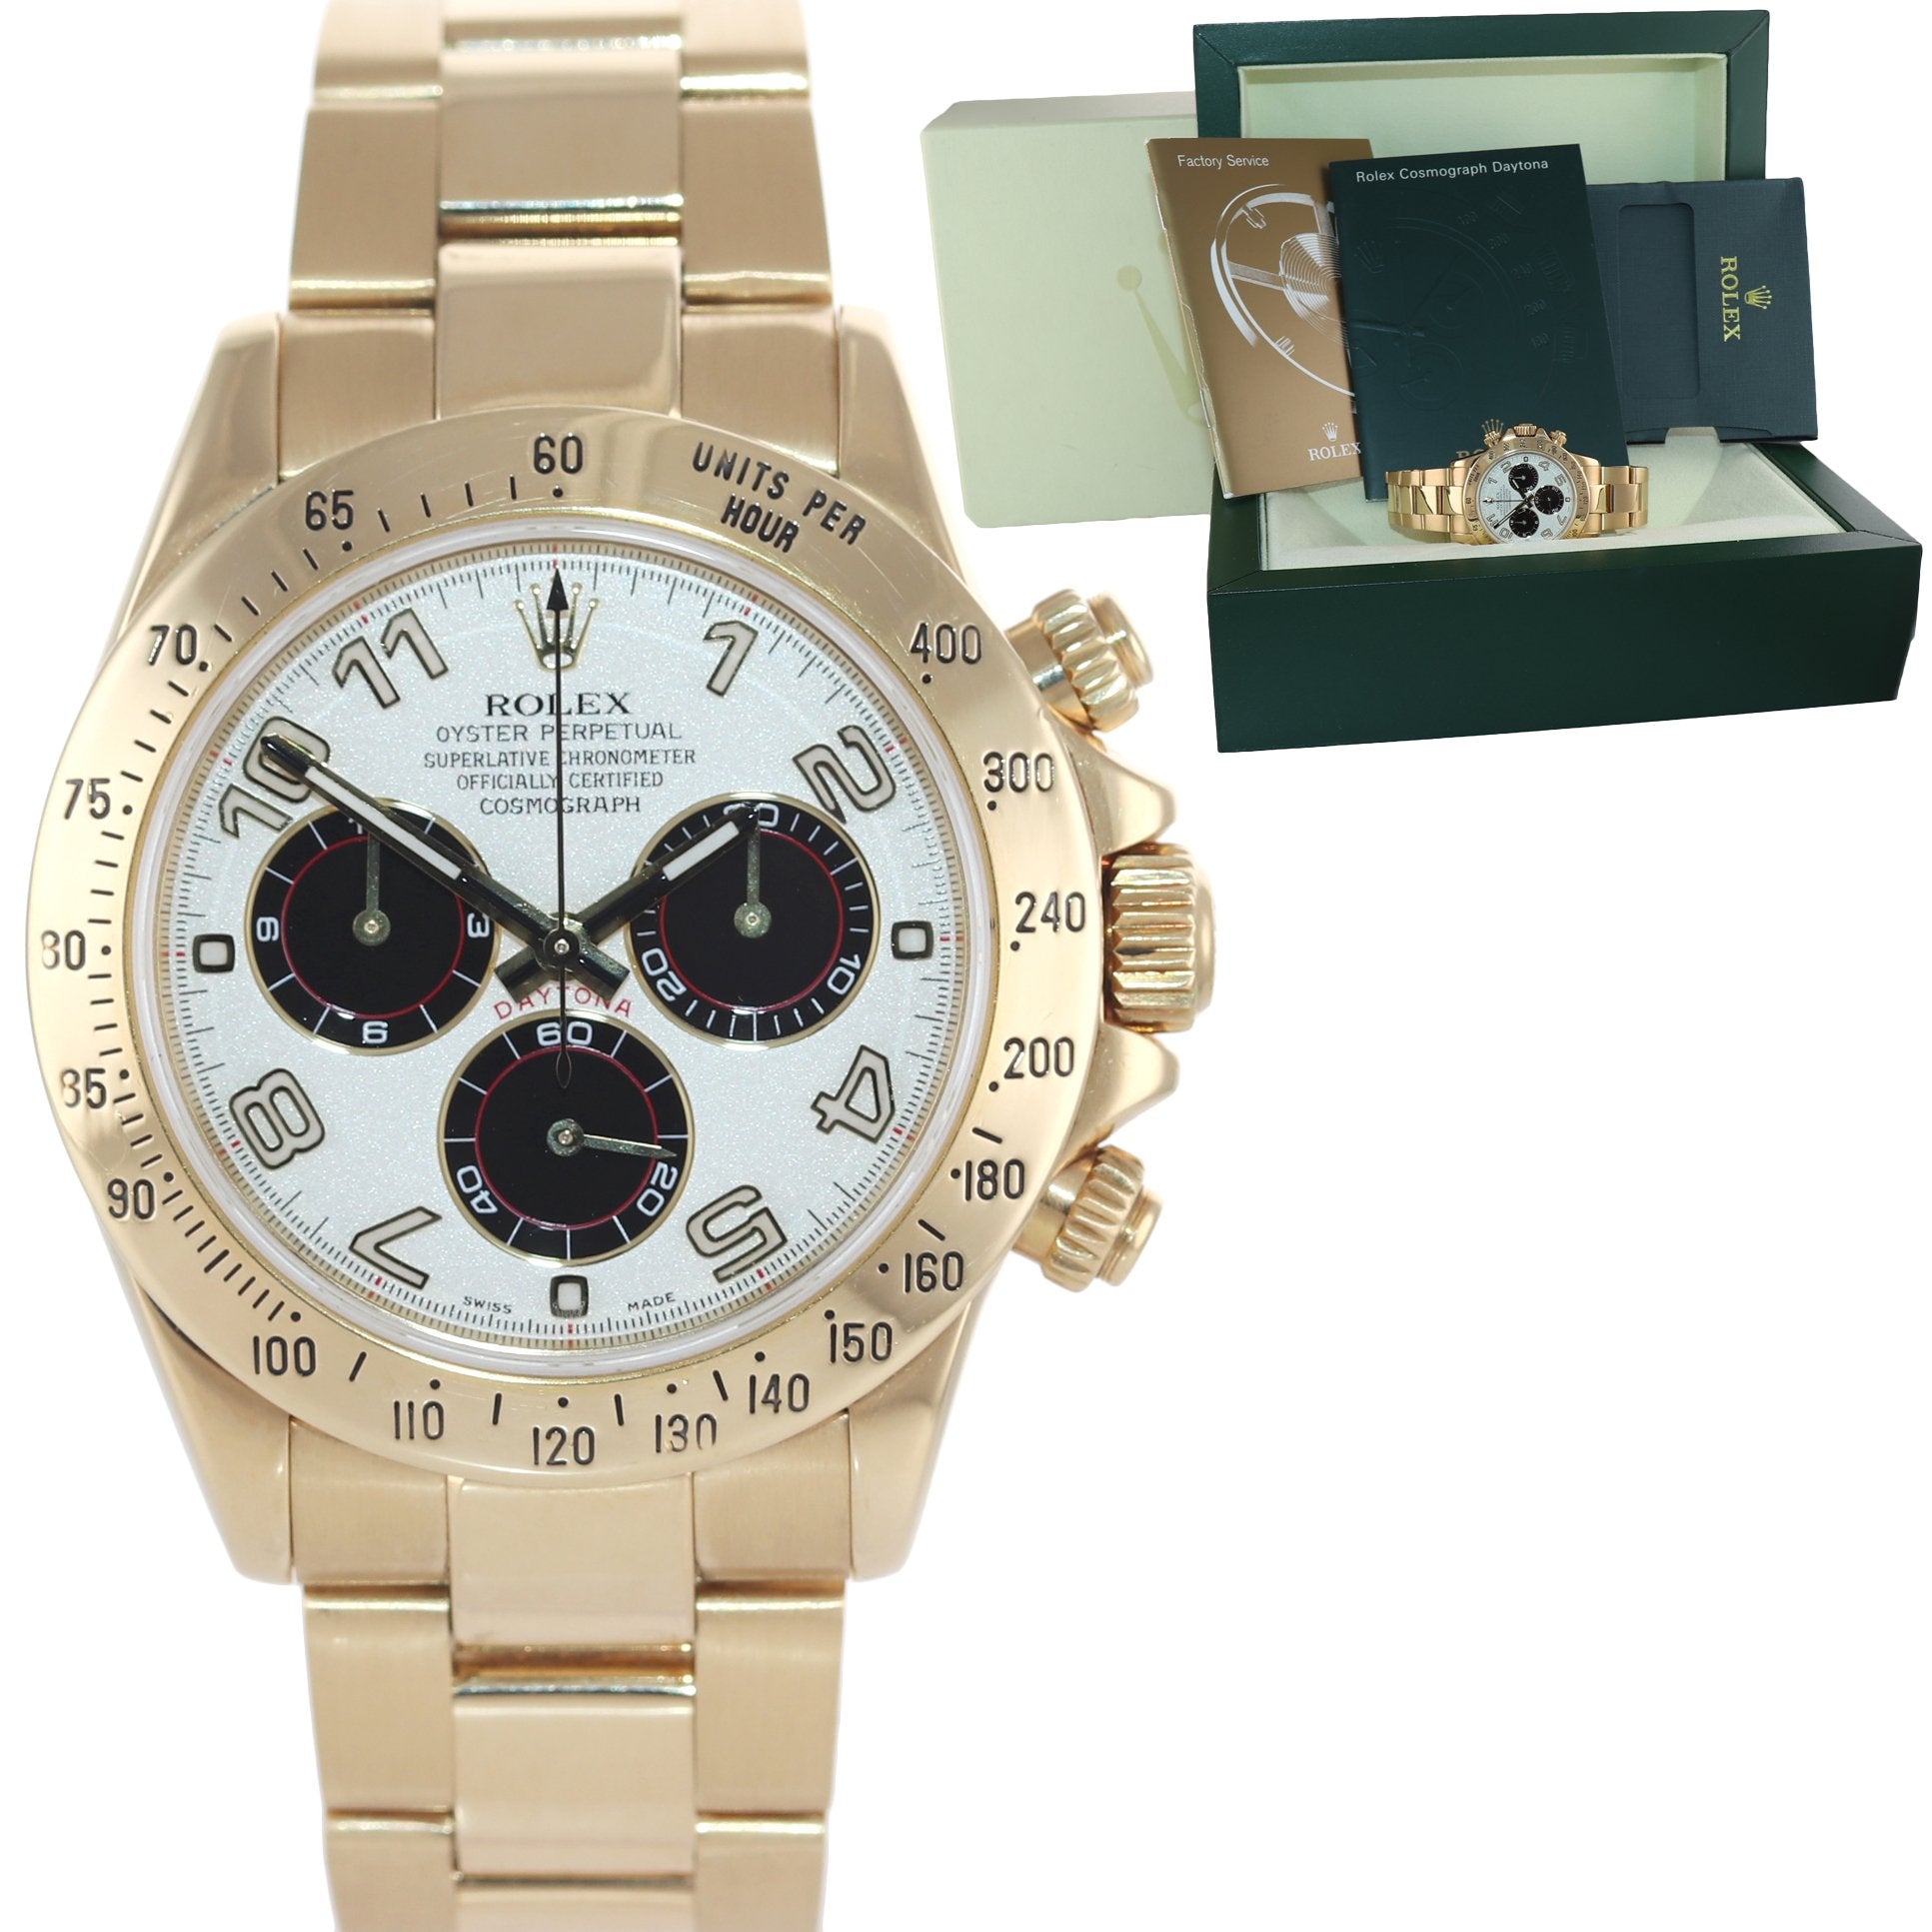 2006 Rolex Daytona 116528 White Panda Dial 18K Yellow Gold 40mm Watch Box